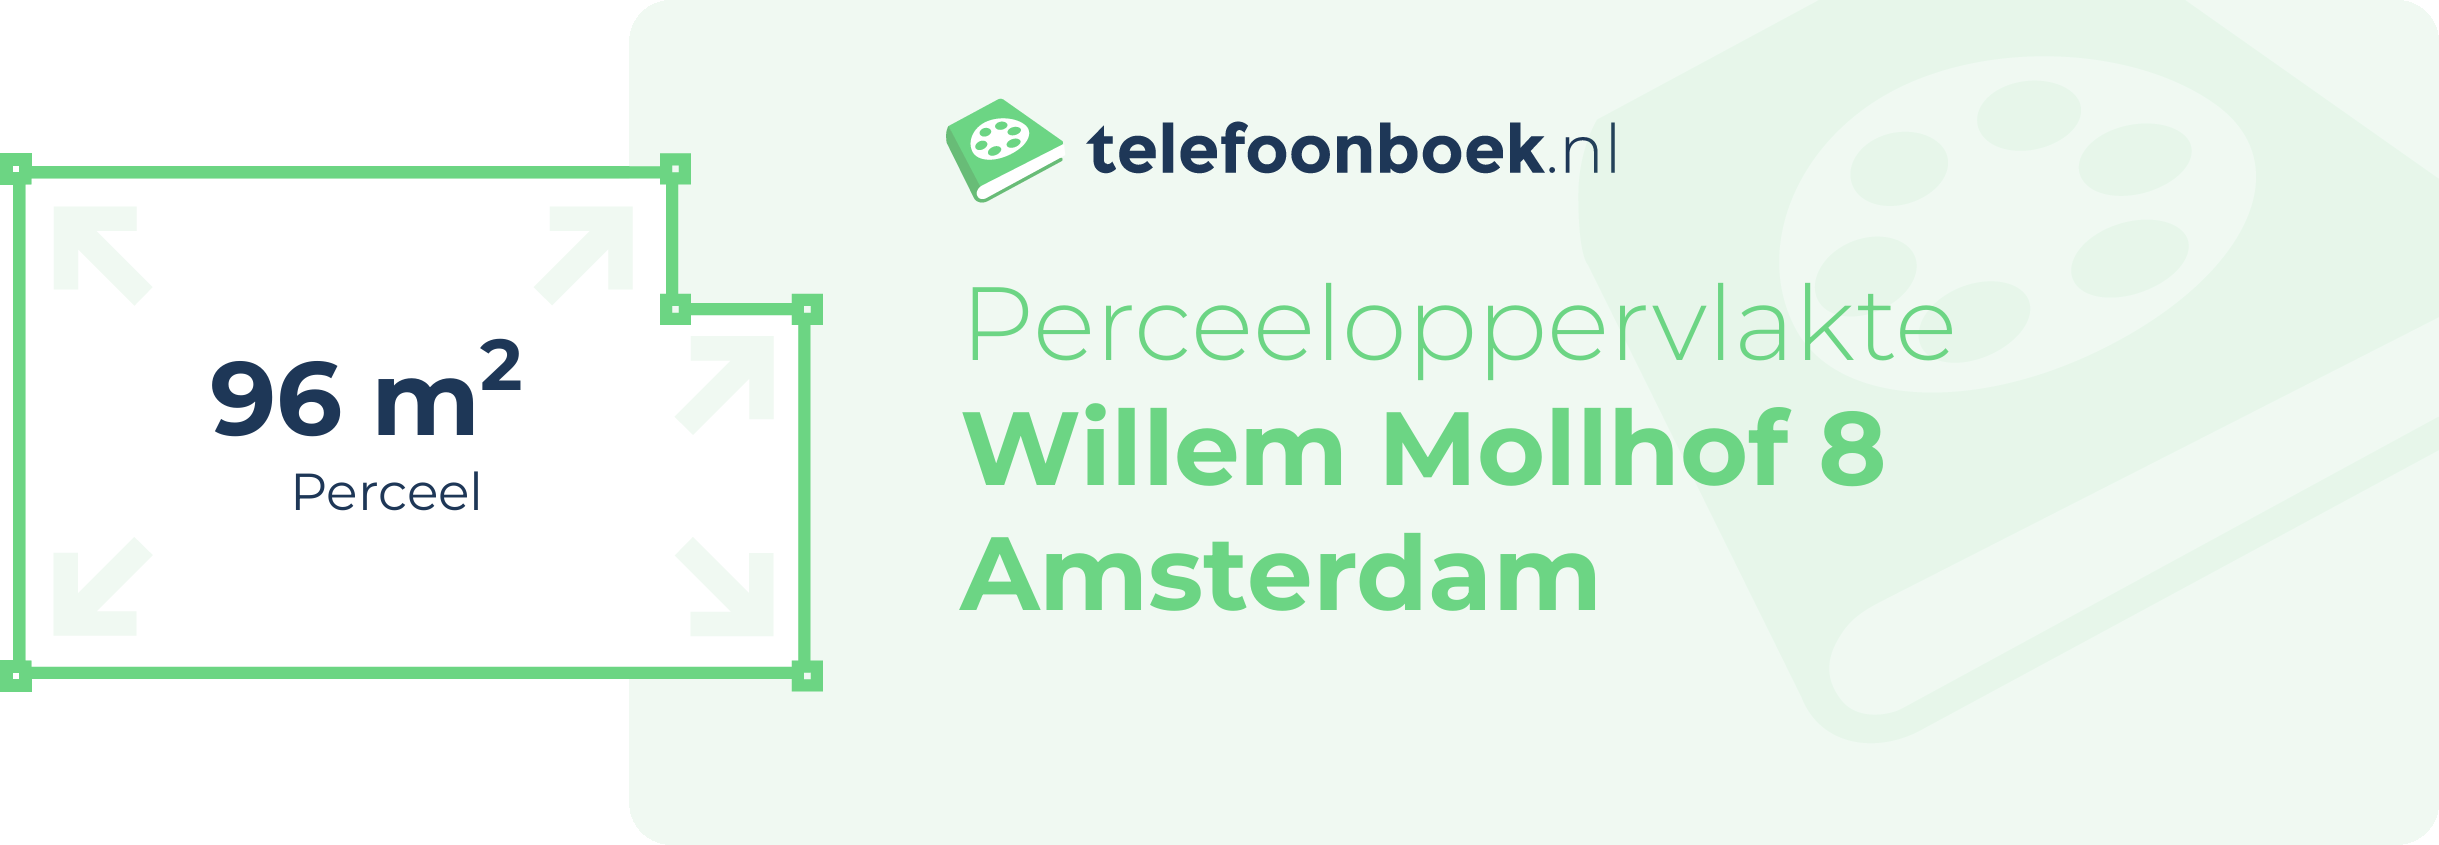 Perceeloppervlakte Willem Mollhof 8 Amsterdam